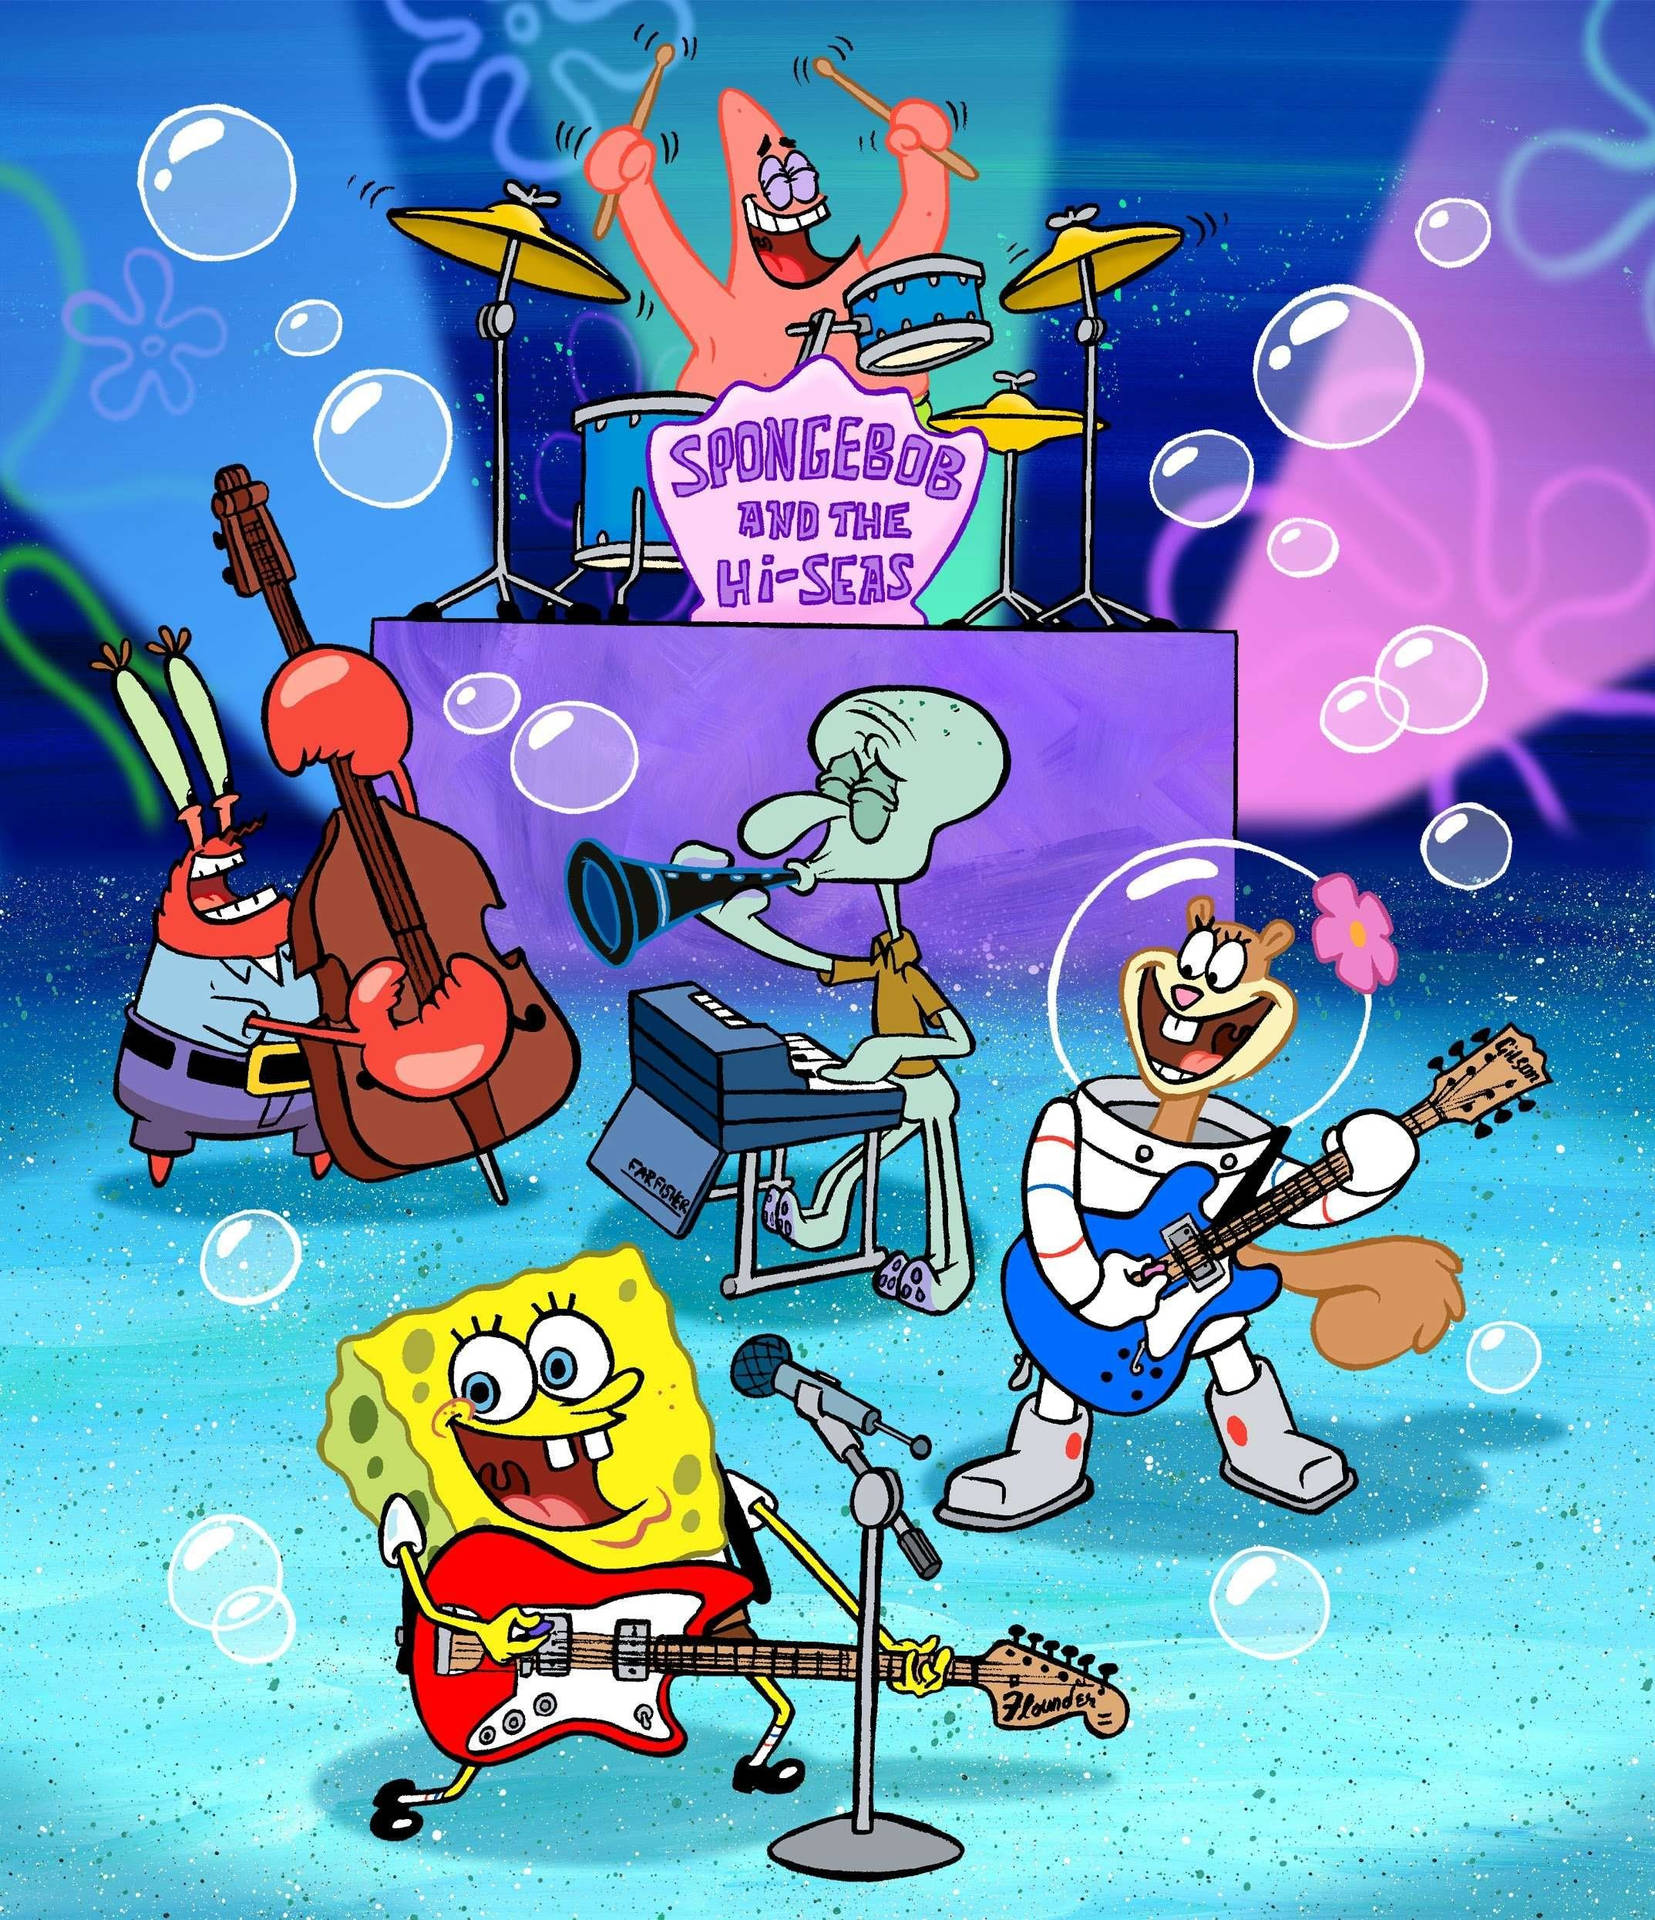 Cute Spongebob Hi-seas Concert Background